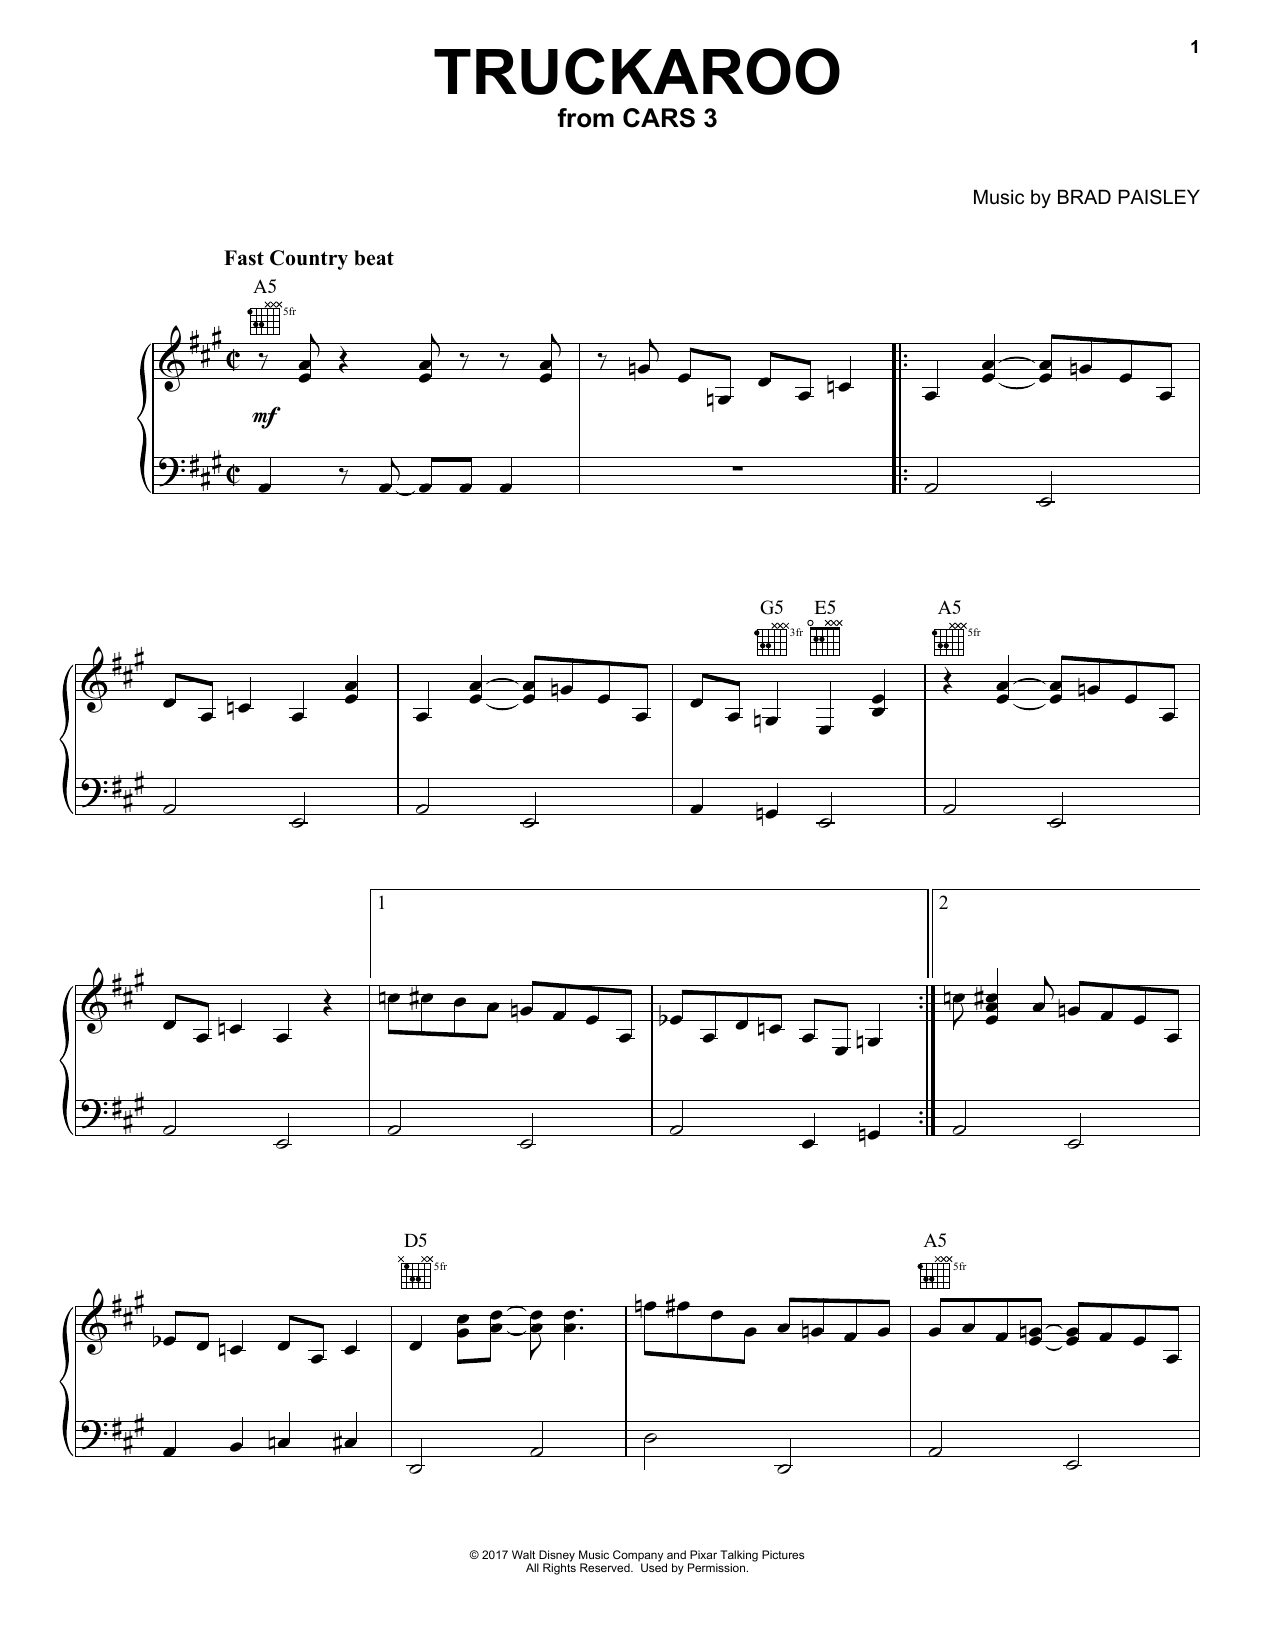 Brad Paisley Truckaroo Sheet Music Notes & Chords for Piano, Vocal & Guitar (Right-Hand Melody) - Download or Print PDF